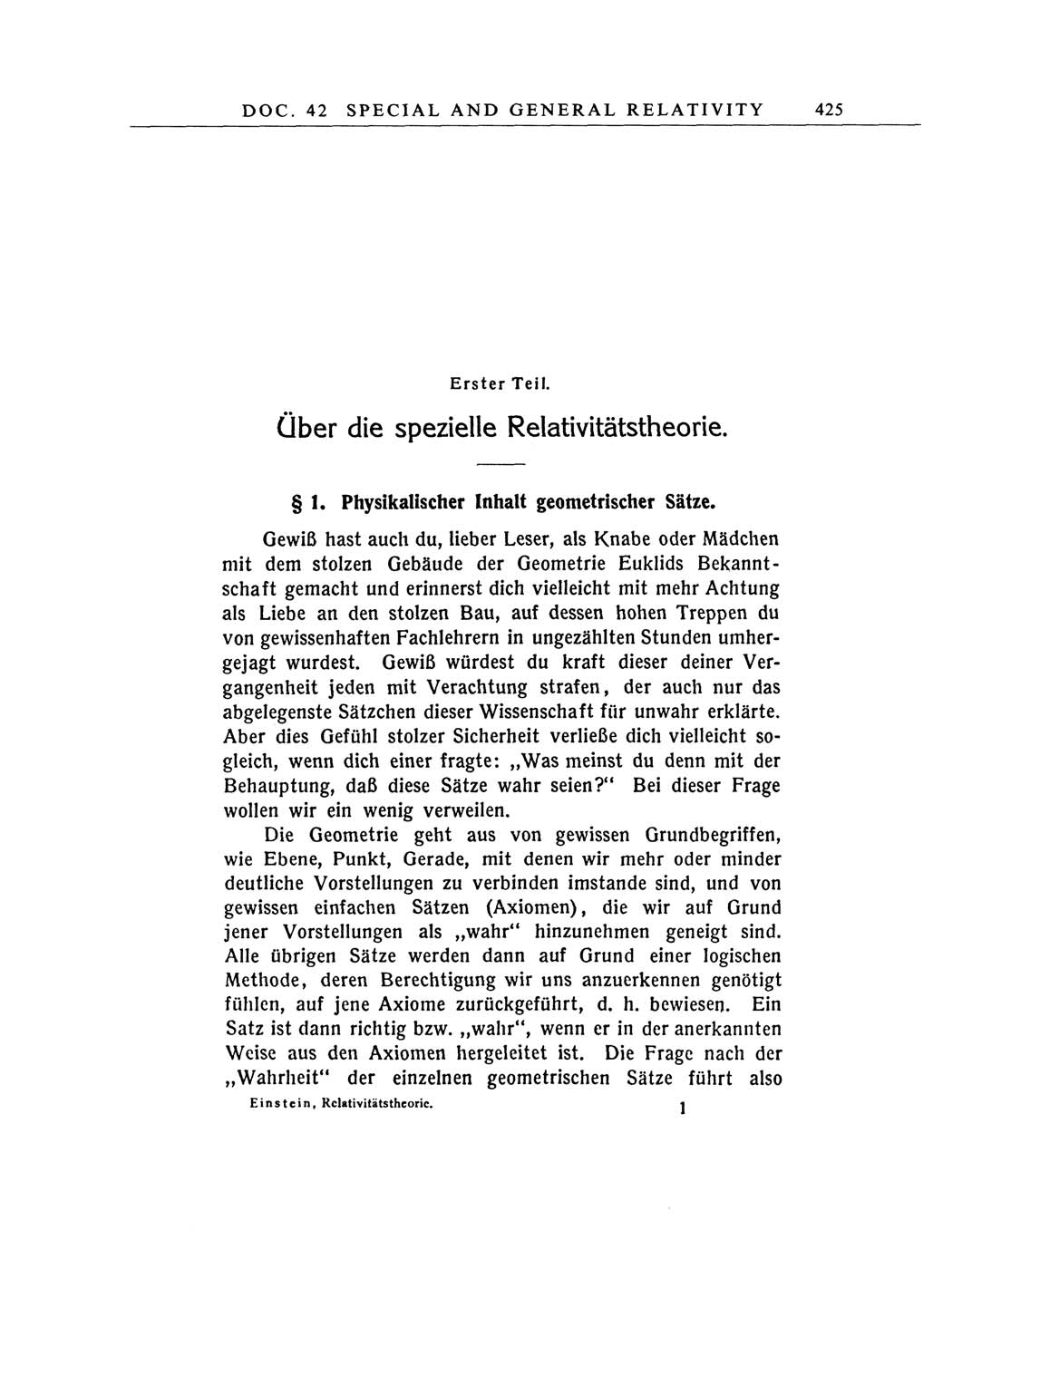 Volume 6: The Berlin Years: Writings, 1914-1917 page 425